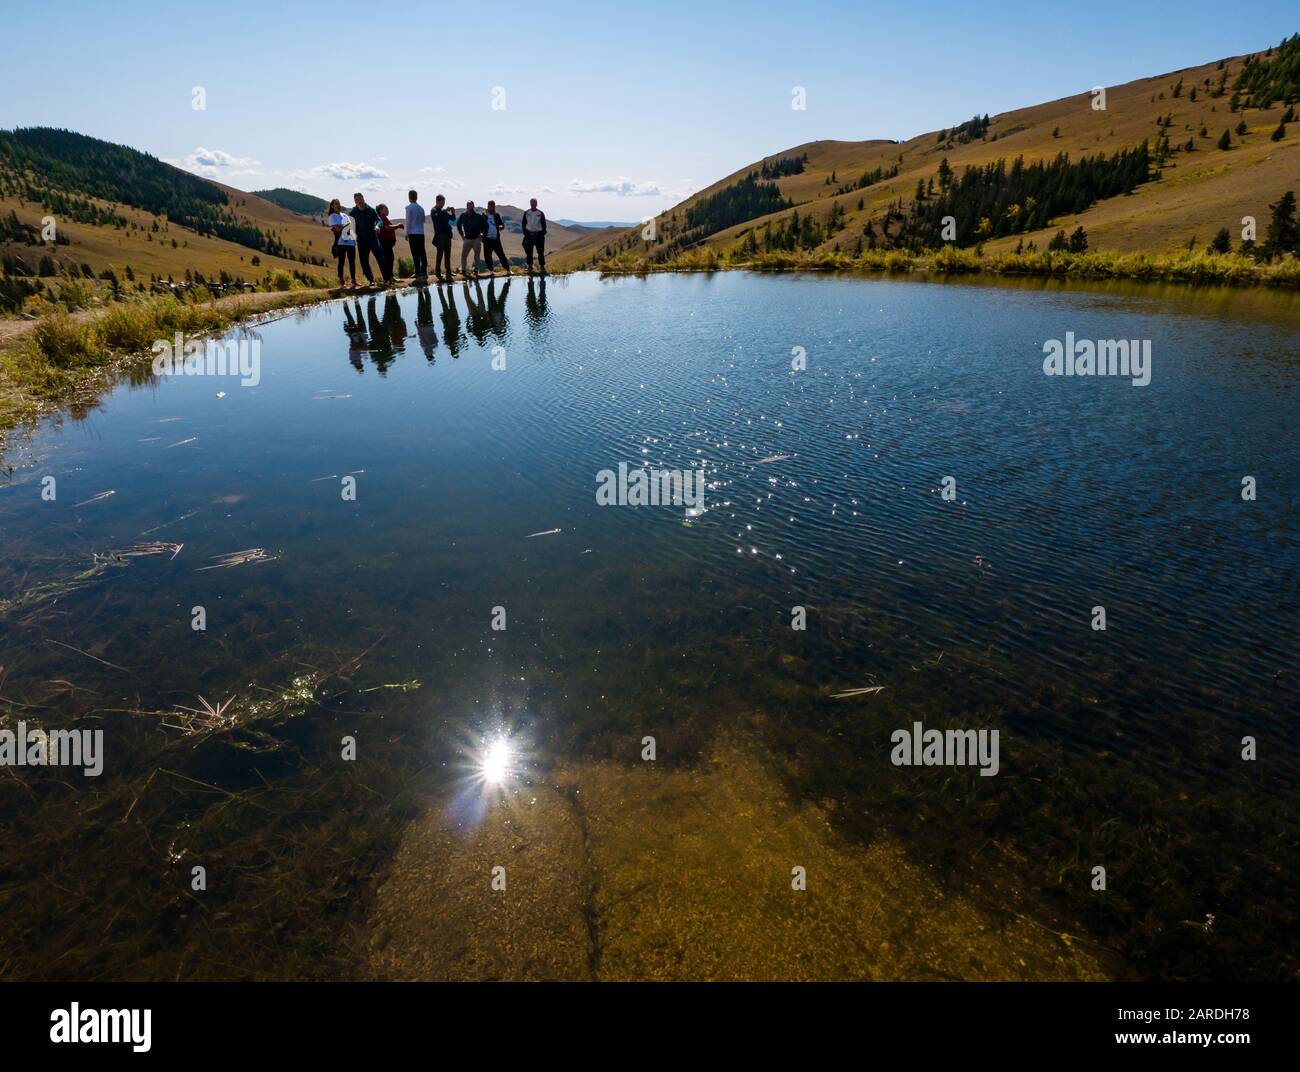 Visitors standong on edge of pond, Manzushir Khiid or Manjusri Monastery, Bodg Khan Mountains, Mongolia Stock Photo